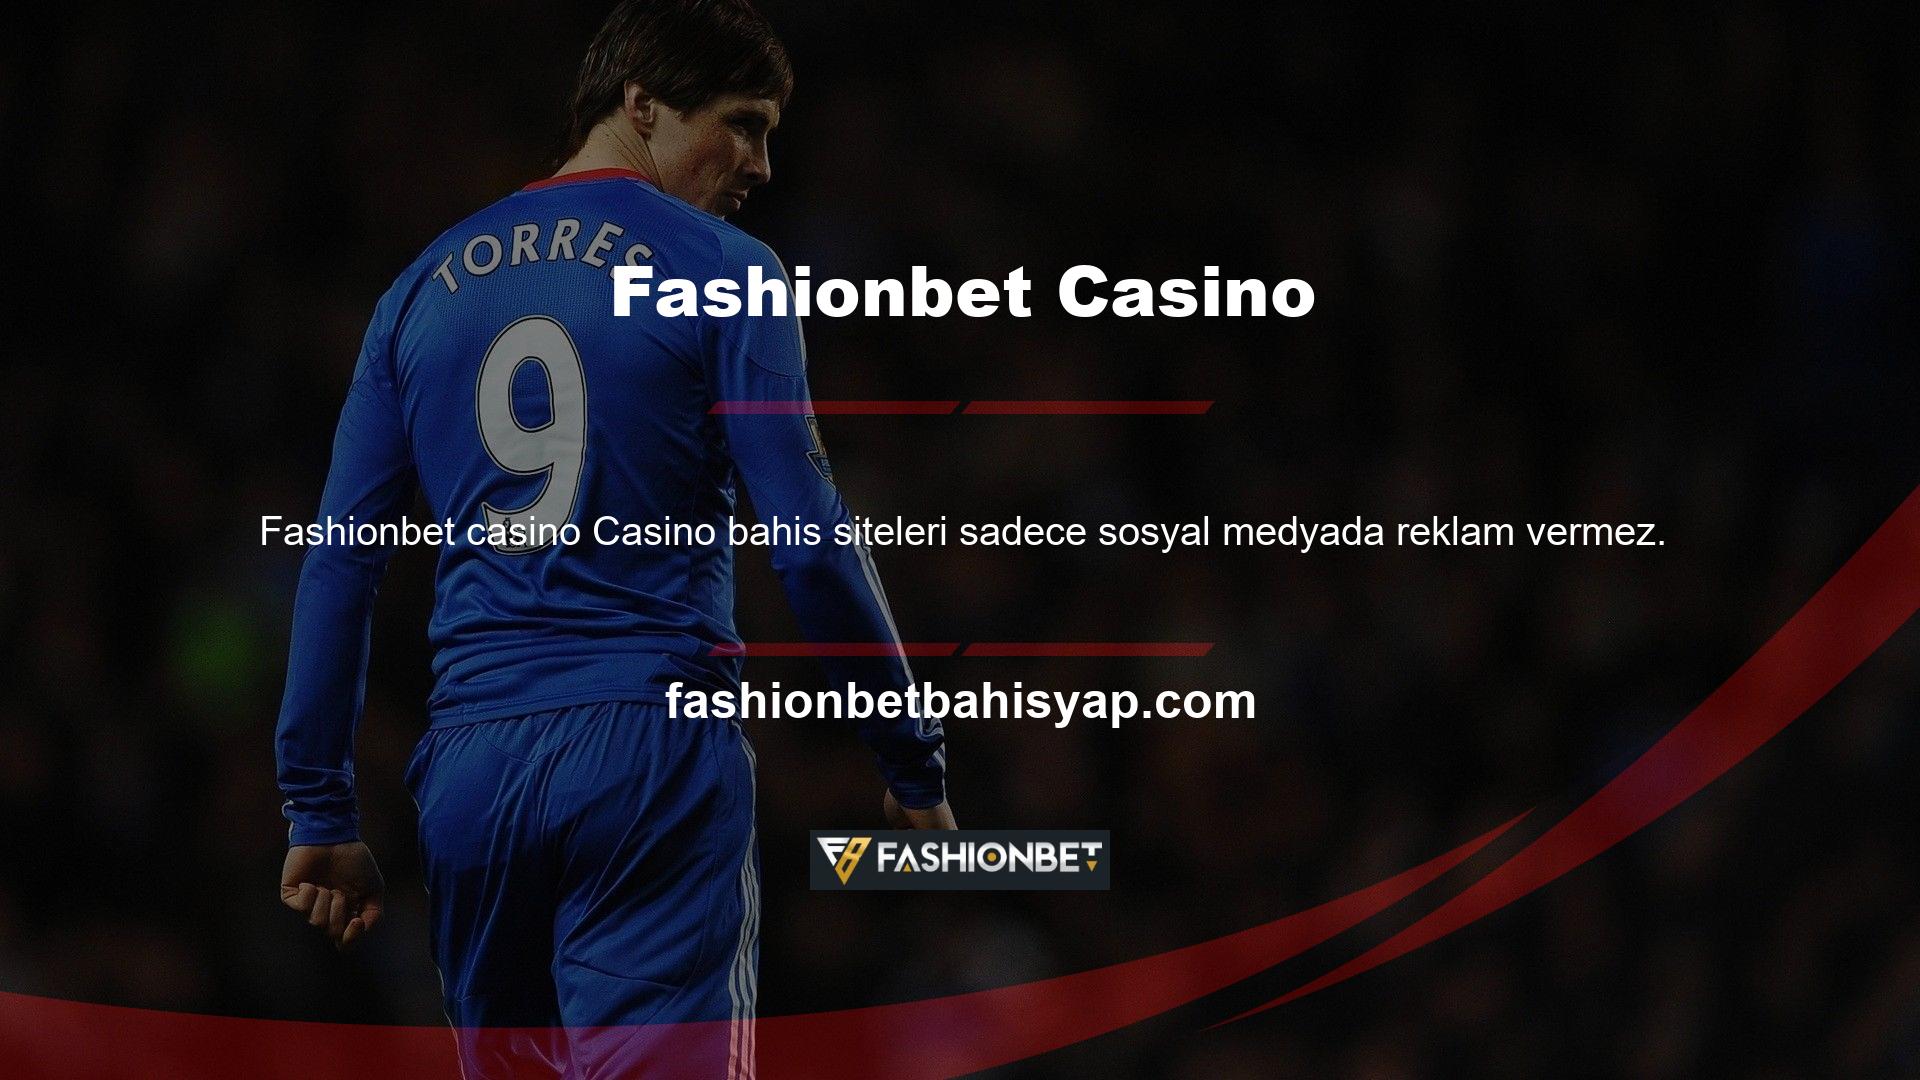 Fashionbet Casino